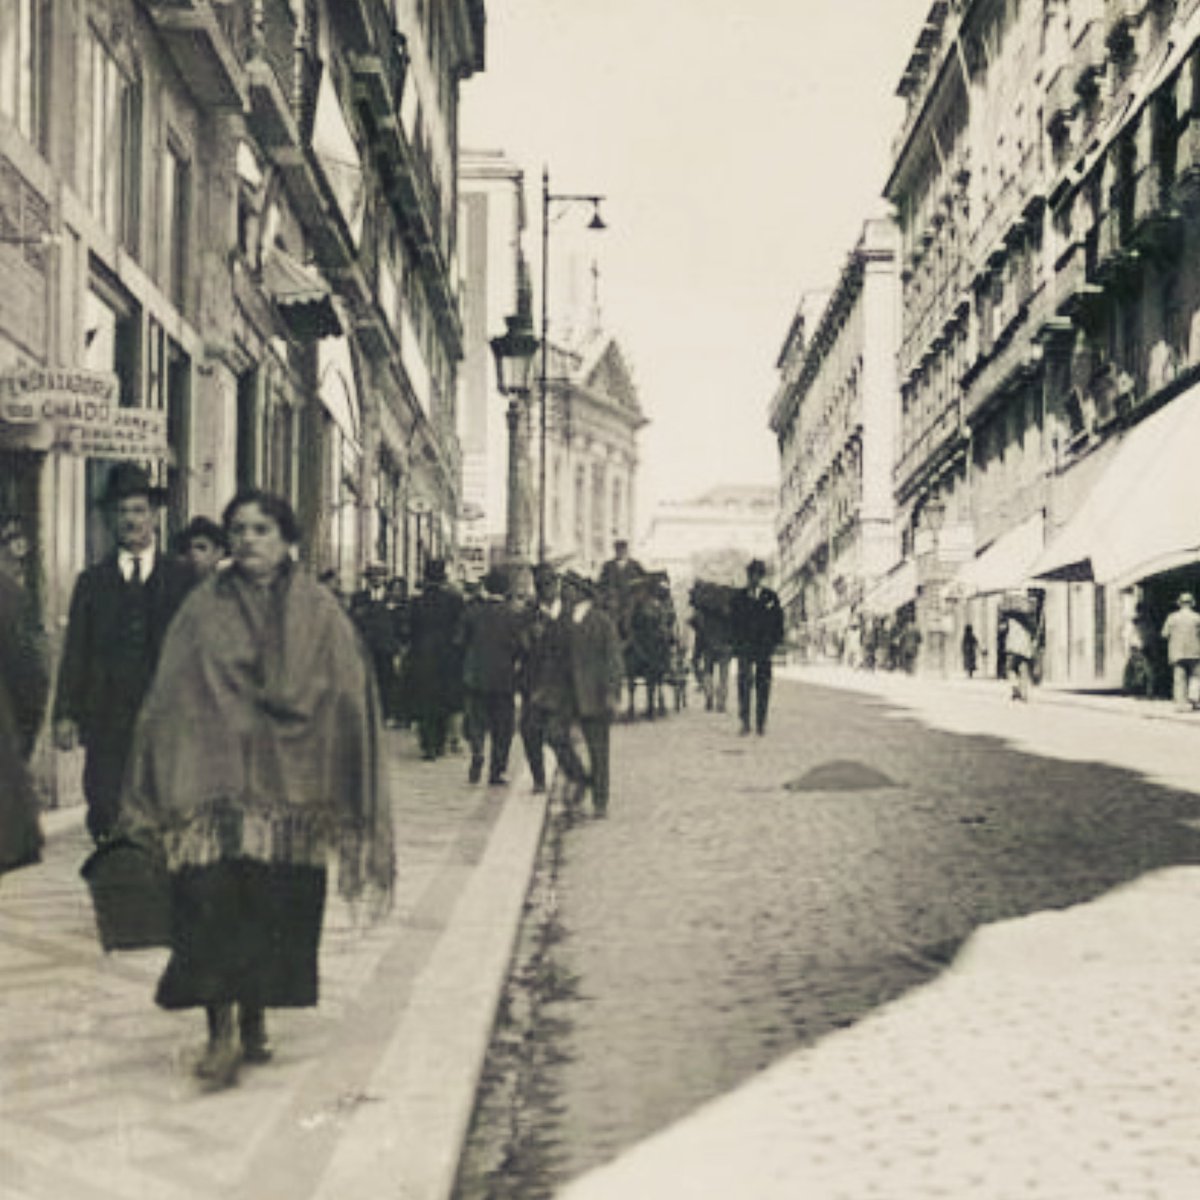 #Chiado in #Lisbon #Portugal in the #1920s
#book #LisboaDesaparecida by #MarinaTavaresDias. #booksaboutcities 
#oldphotos 
#vintage#streetstyle #urbanlifestyle